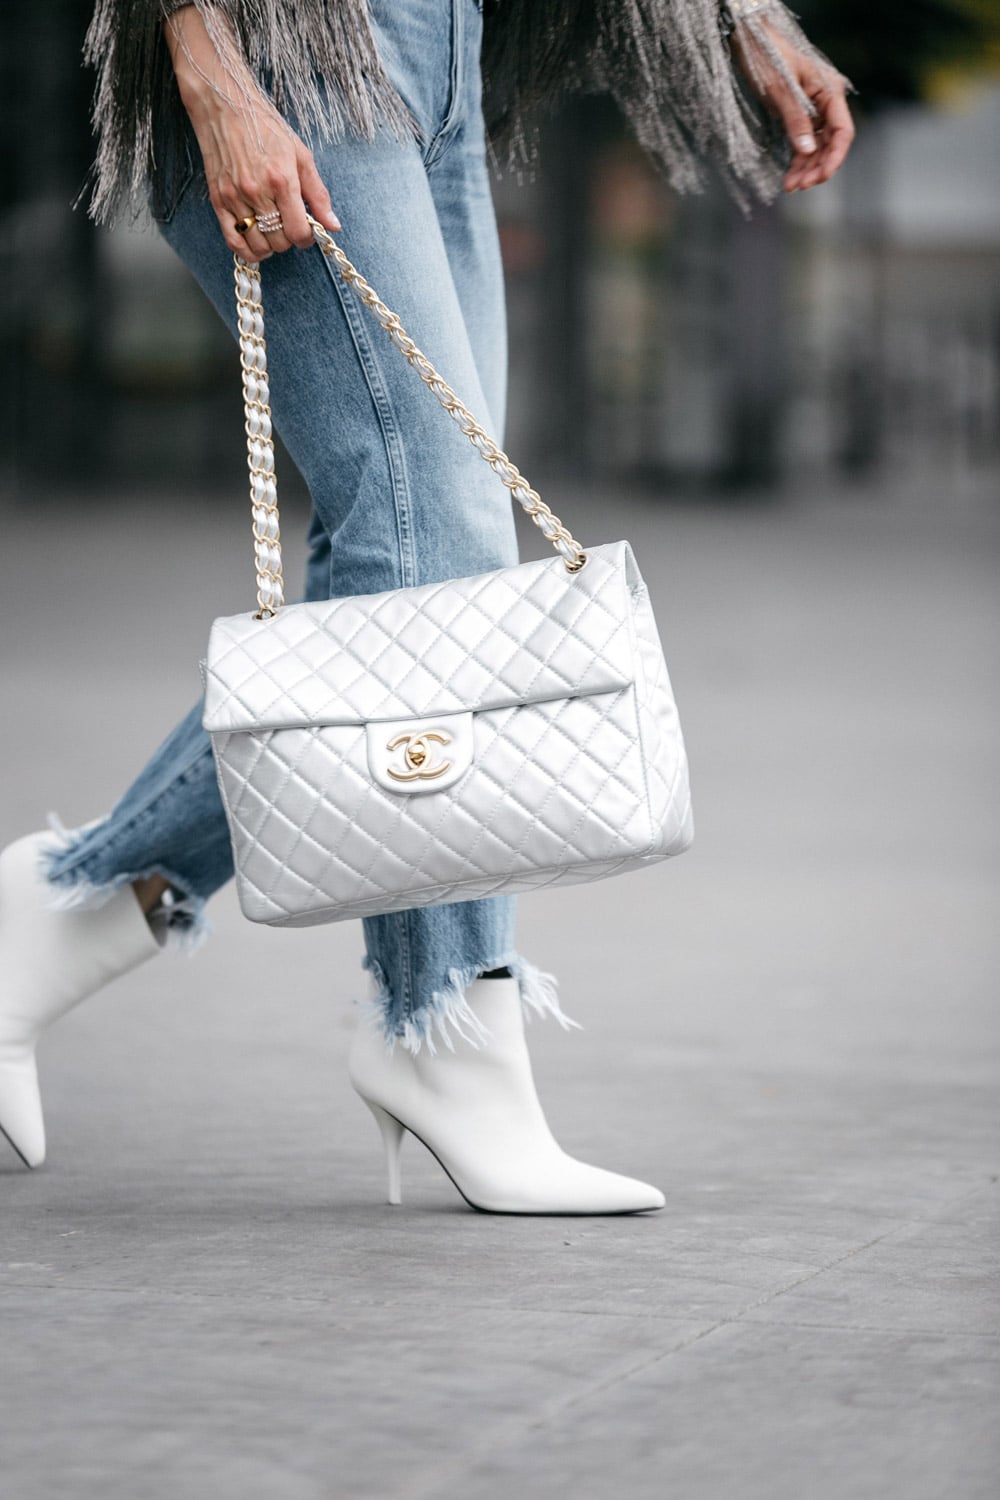 Chanel Maxi Silver Handbag